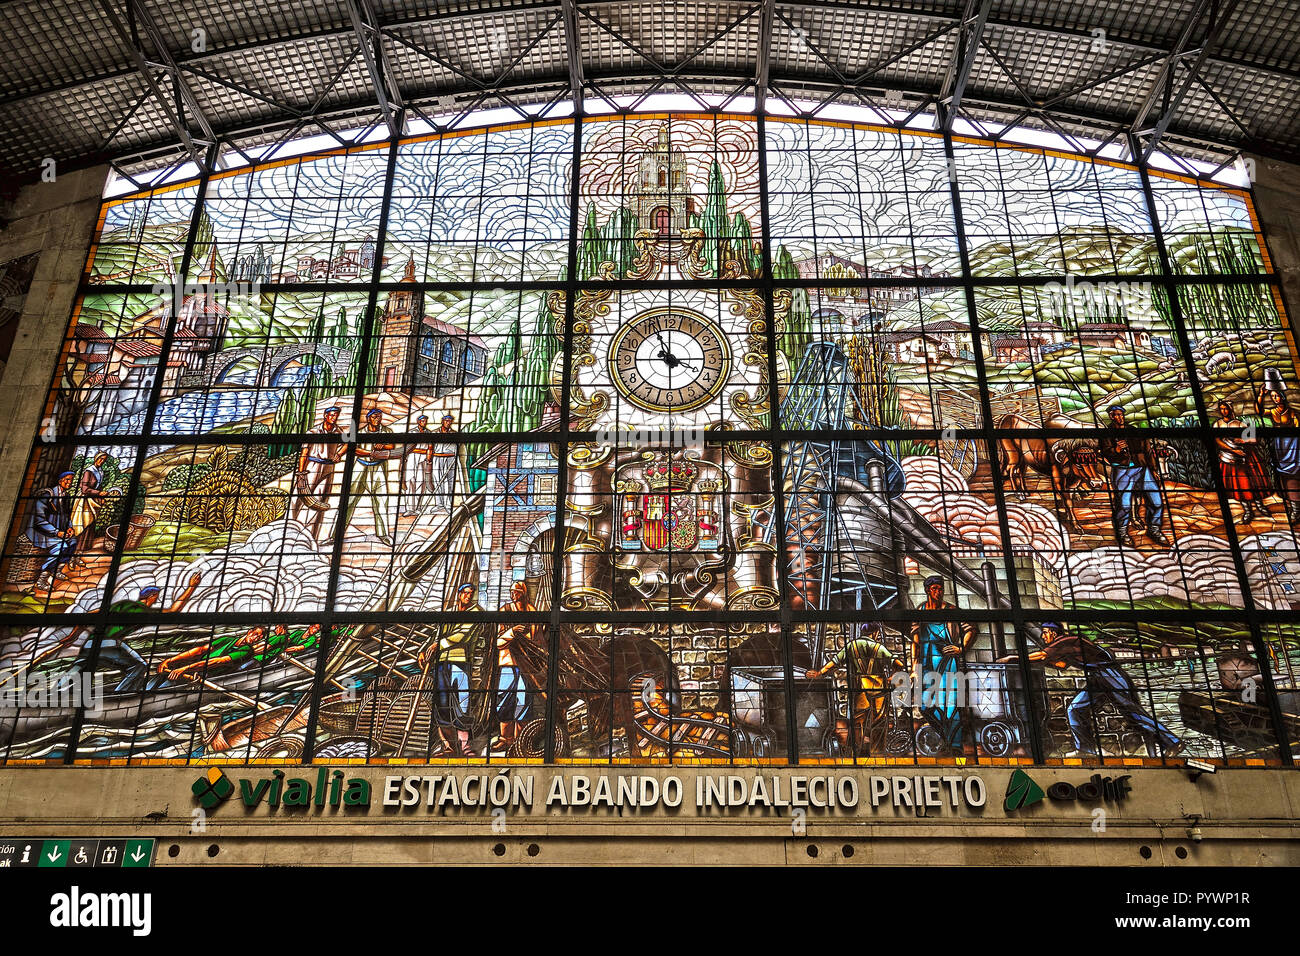 Bilbao City, Basque Region, Spain The fabulous stained glass  facade inside the  Bilbao main-line railway station Stock Photo